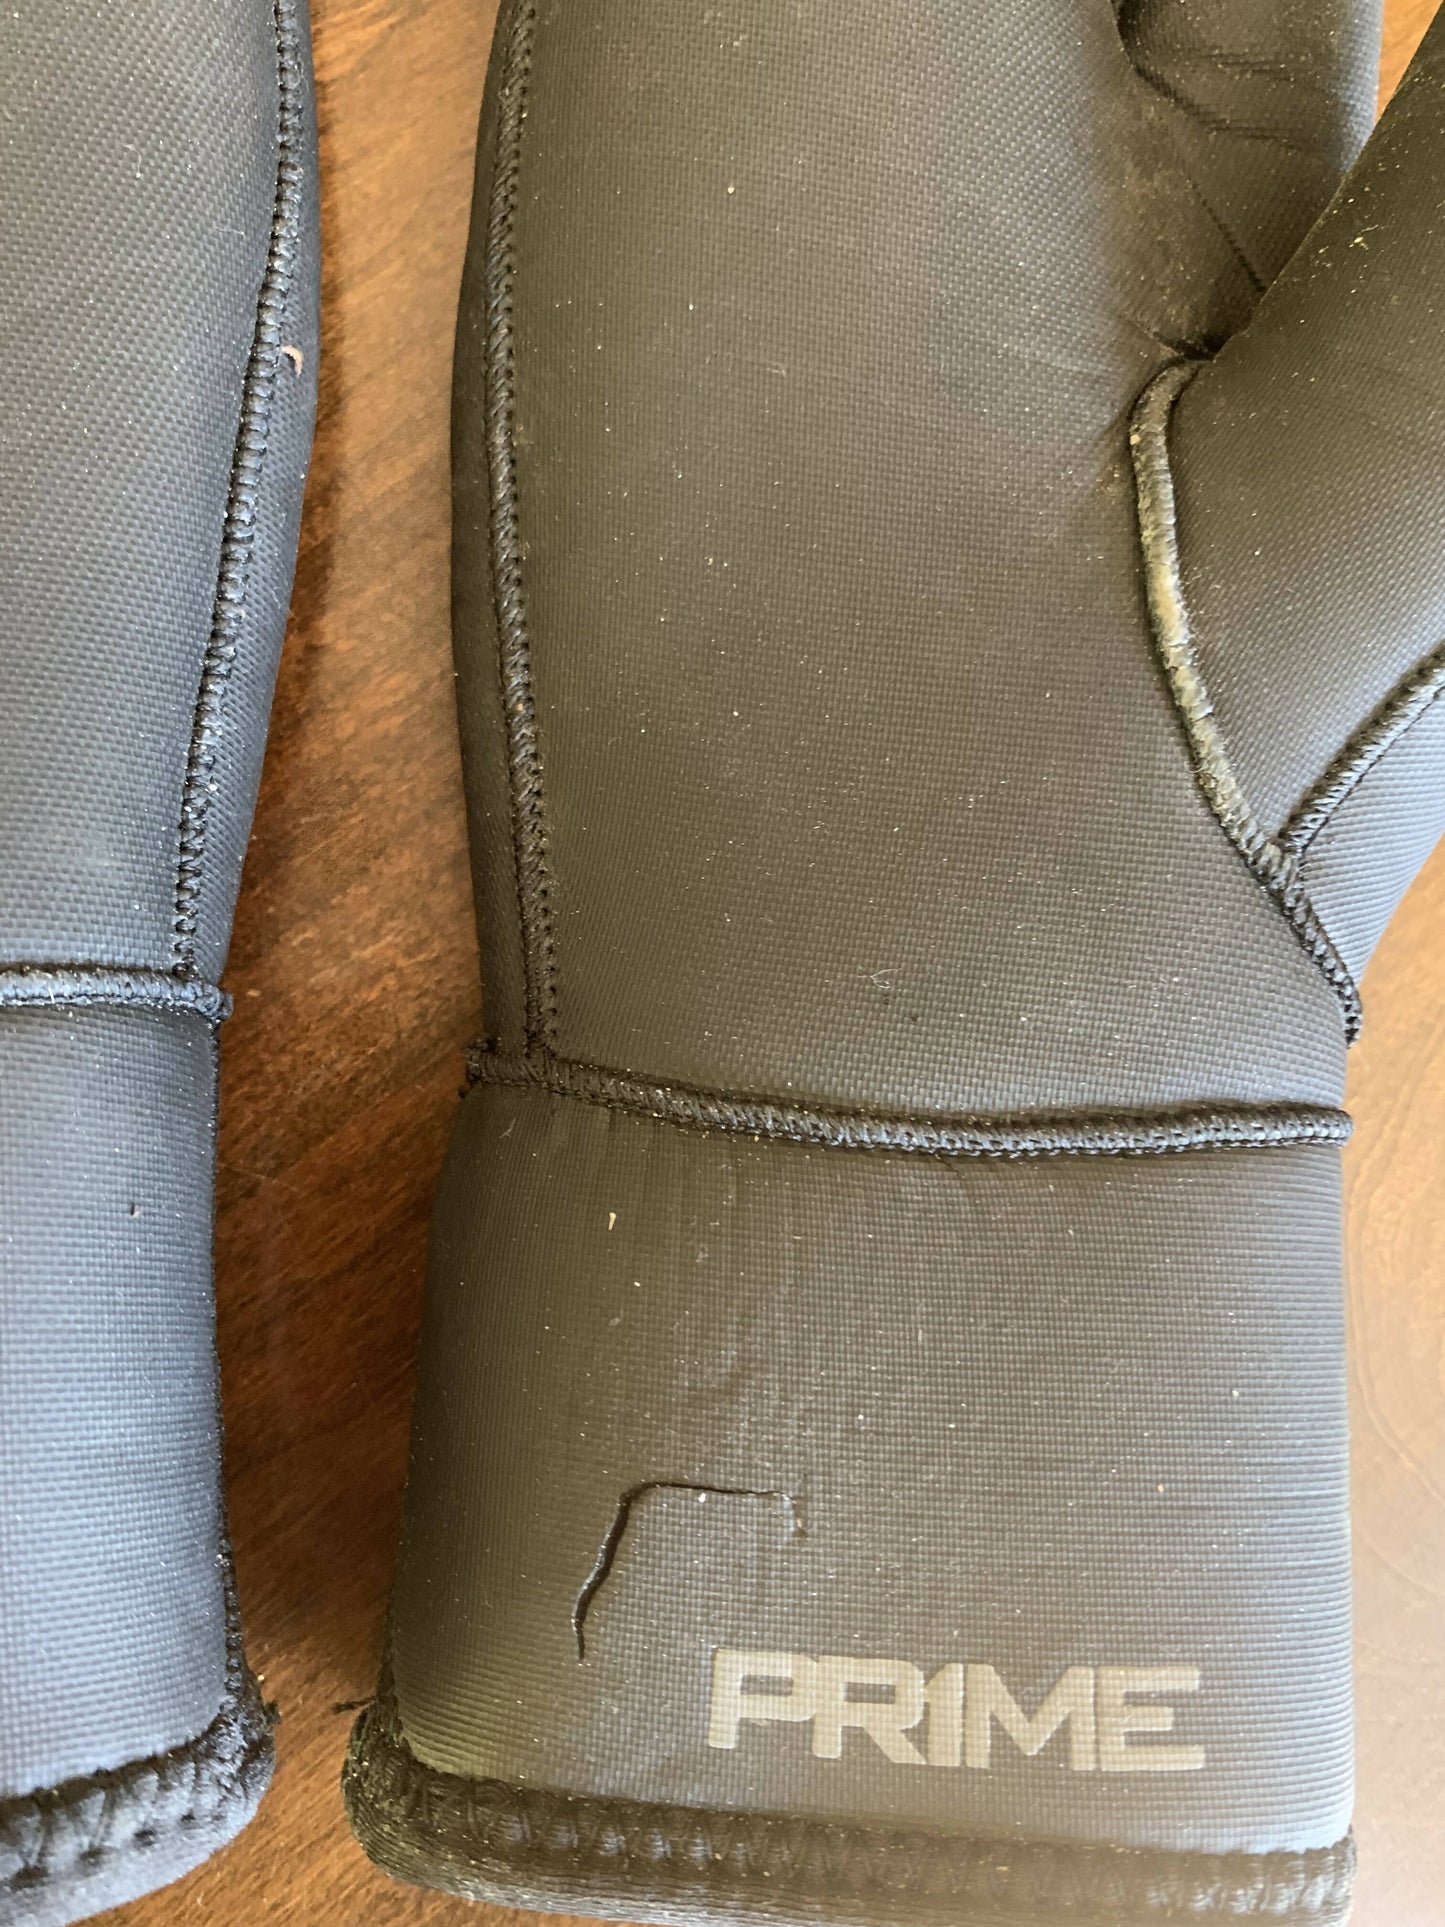 Body glove 5mm claw gloves. Size S